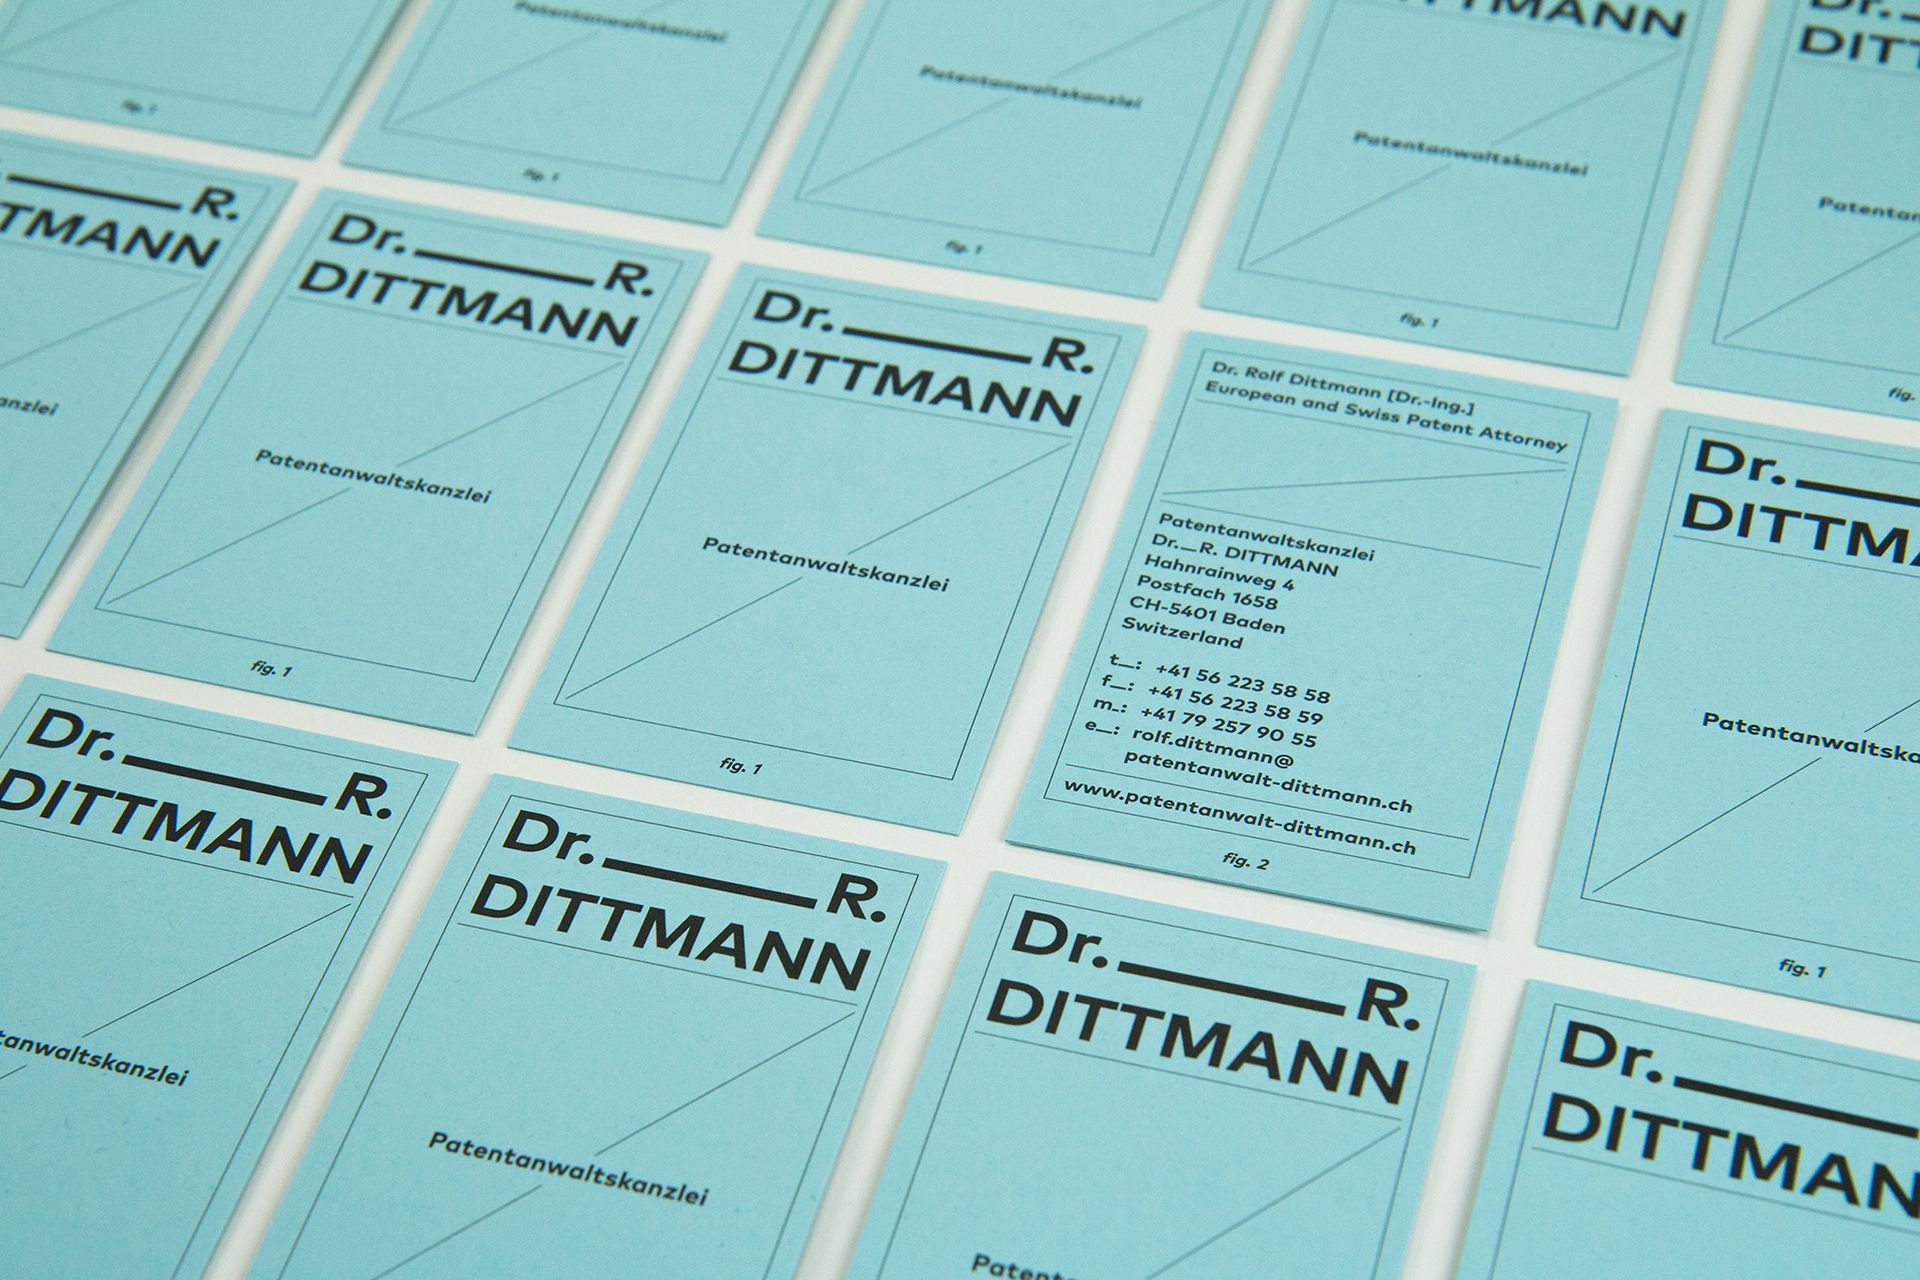 Dr._R. Dittmann